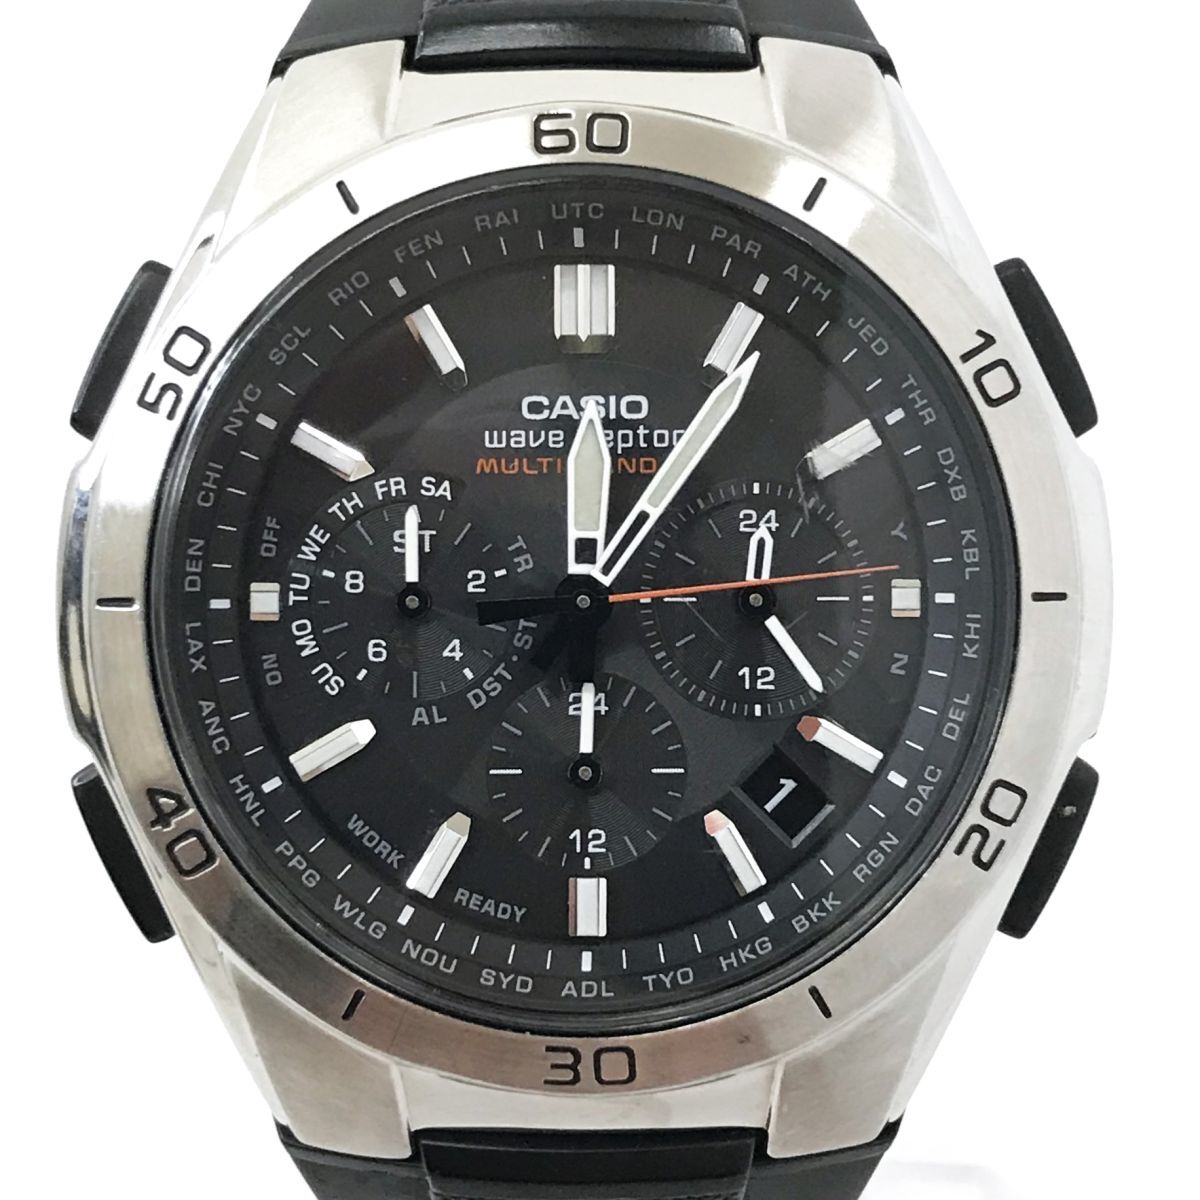 CASIO カシオ WAVE CEPTOR ウェーブセプター 腕時計 WVQ-M410-1 電波ソーラー アナログ ラウンド マルチバンド6 カレンダー ブラックの画像1